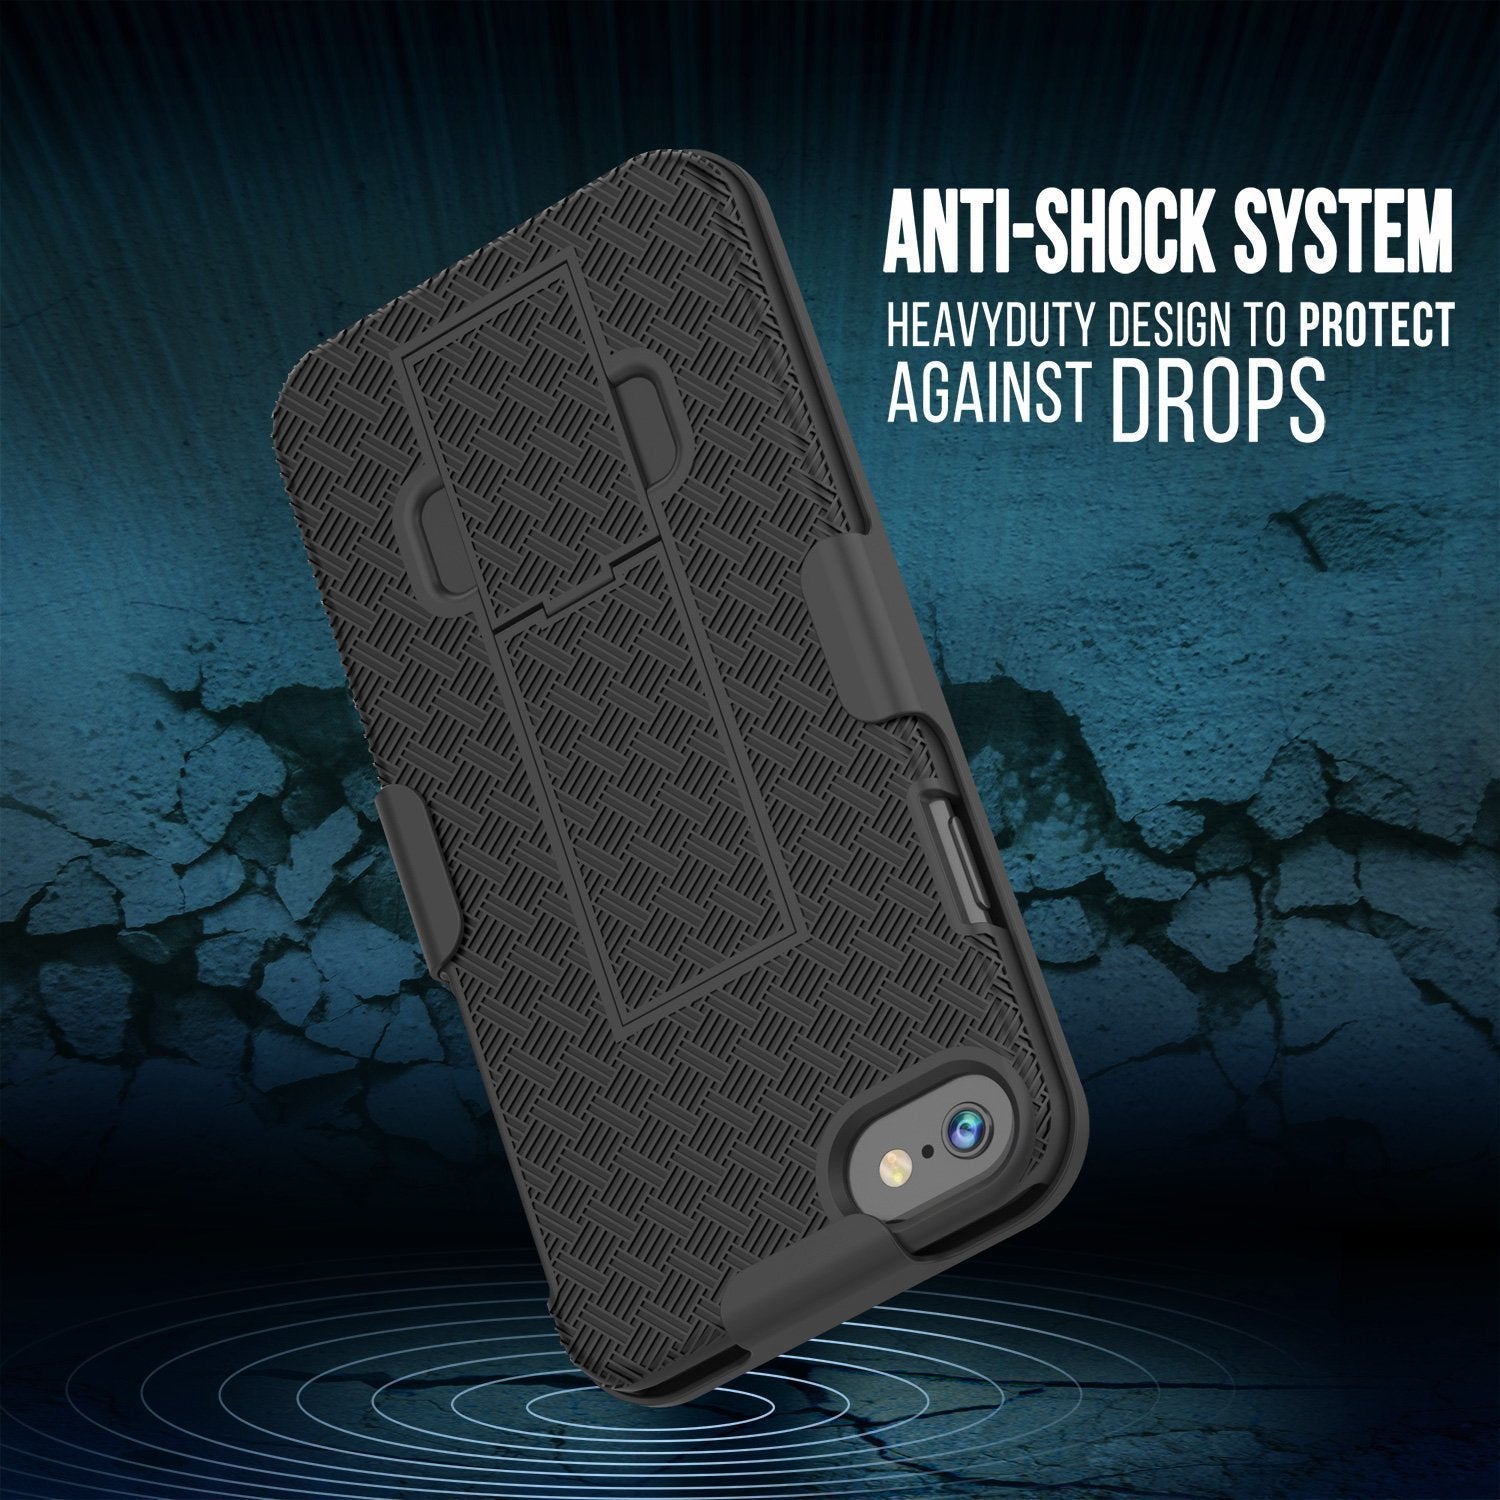 Punkcase iPhone 8 / 7 Case, Holster Belt Clip & Built-In Kickstand, Black